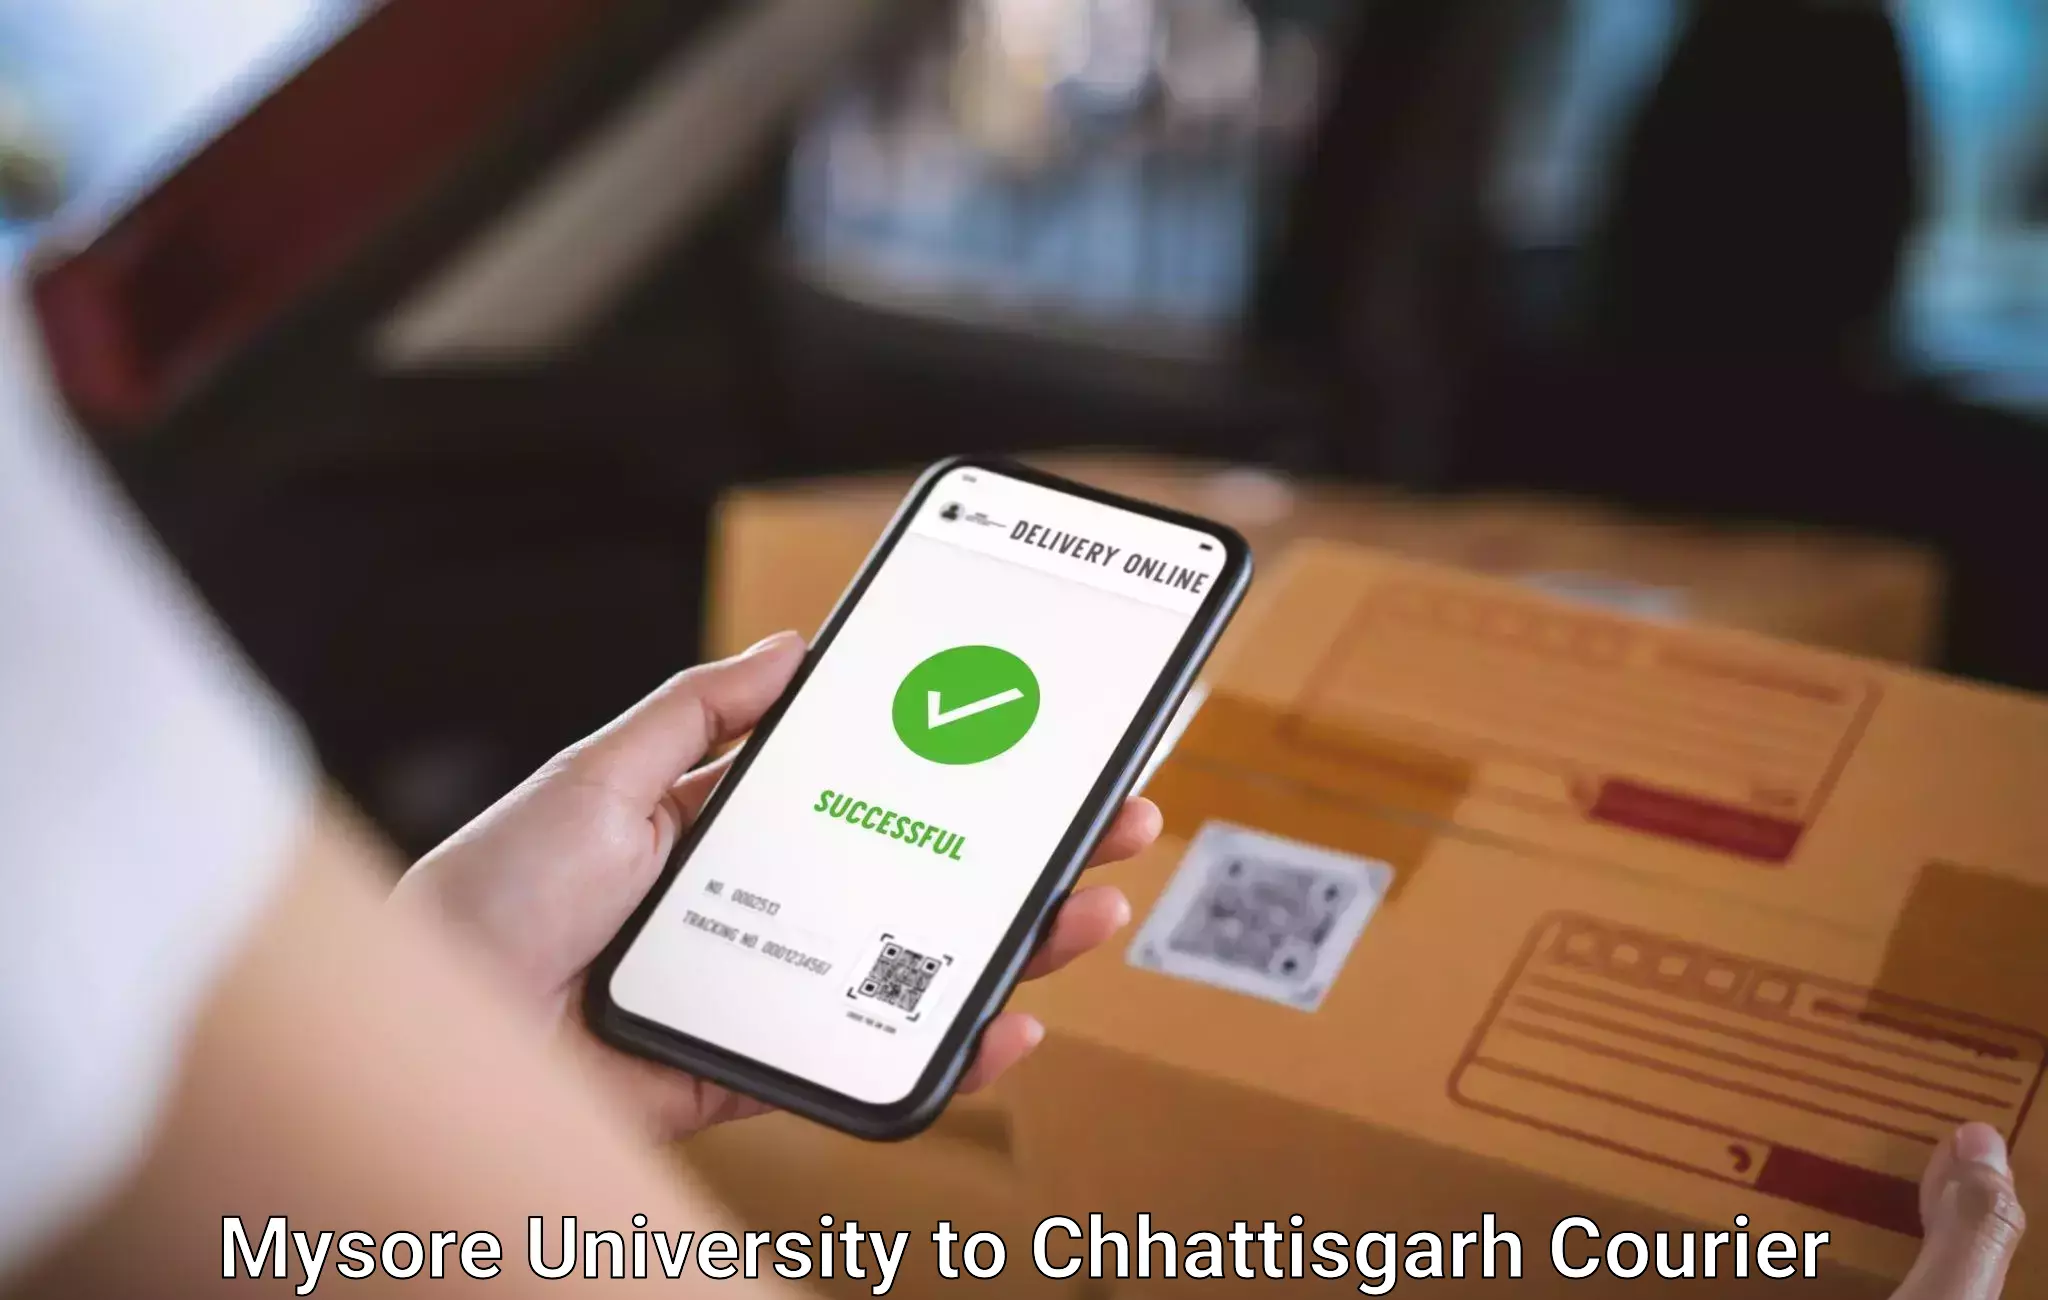 Baggage transport estimate Mysore University to Patna Chhattisgarh